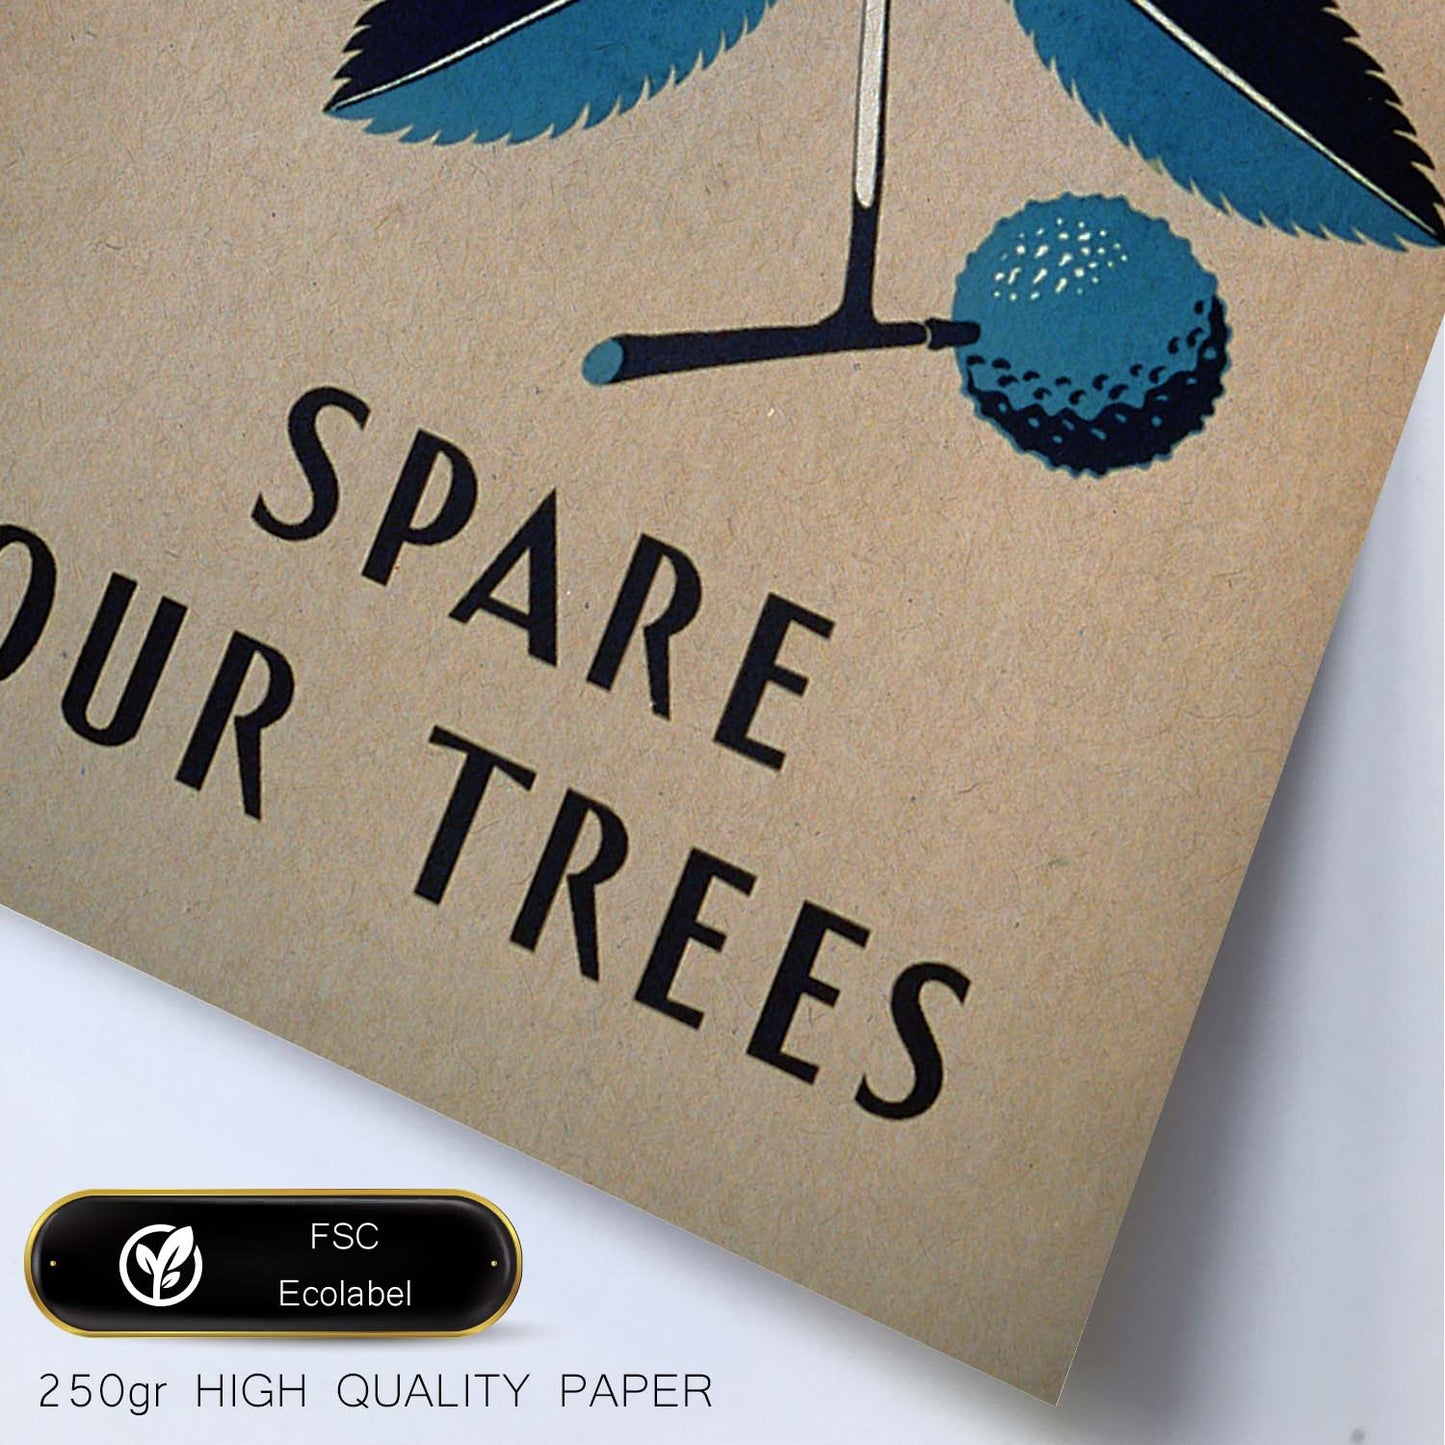 Poster vintage. Cartel vintage Spare our trees Ohio de 1938.-Artwork-Nacnic-Nacnic Estudio SL